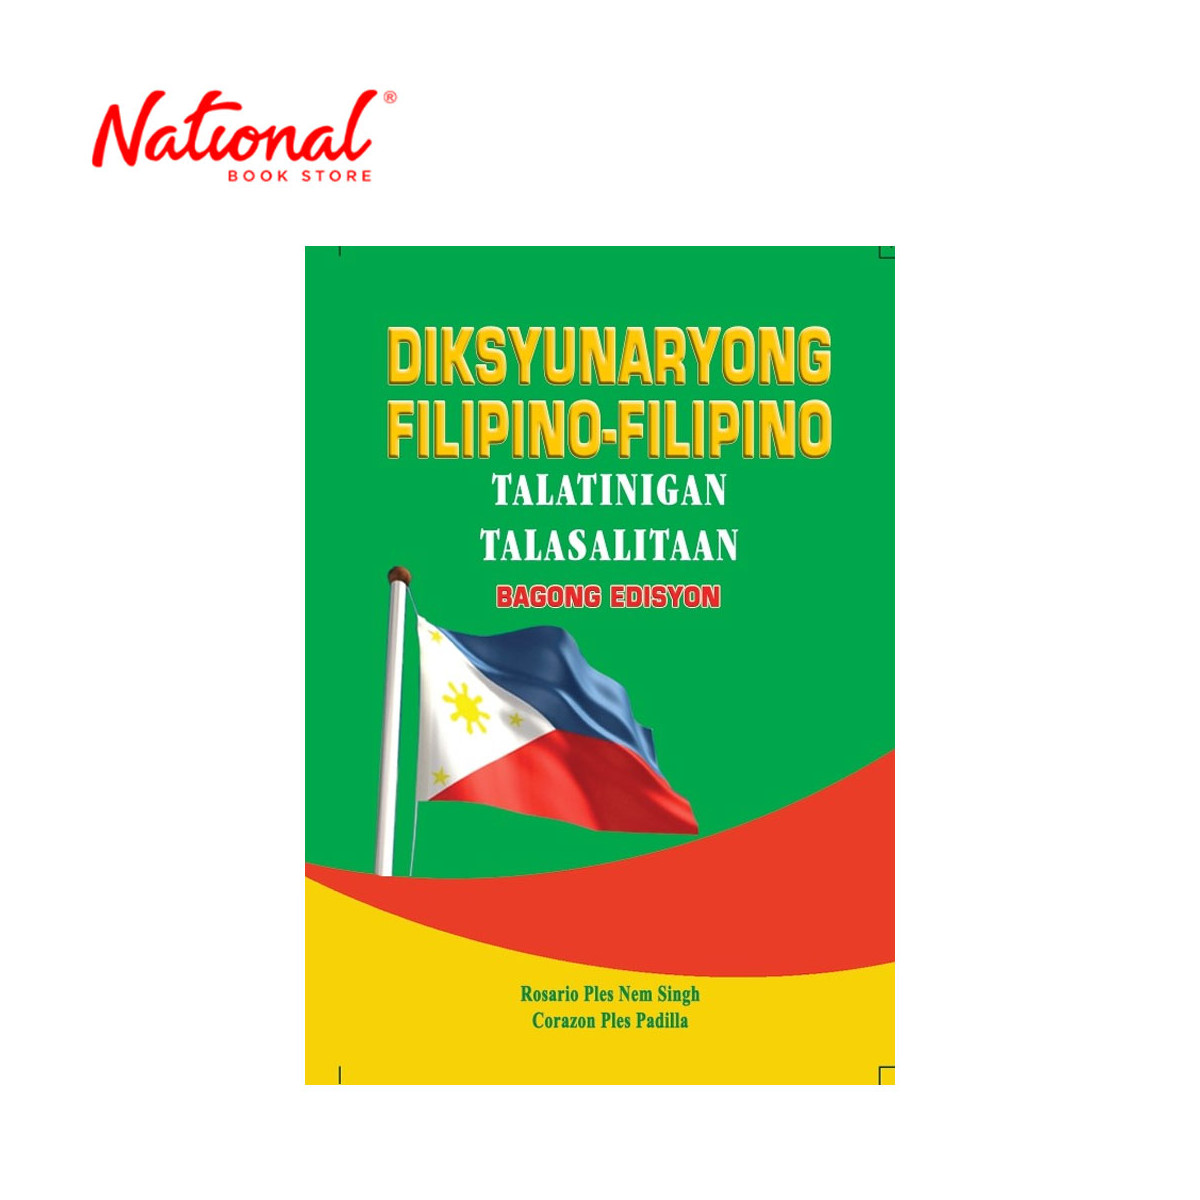 Diksyunaryong Filipino Filipino Talatini Bagong Edisyon by Corazon Ples Padilla - Trade Paperback